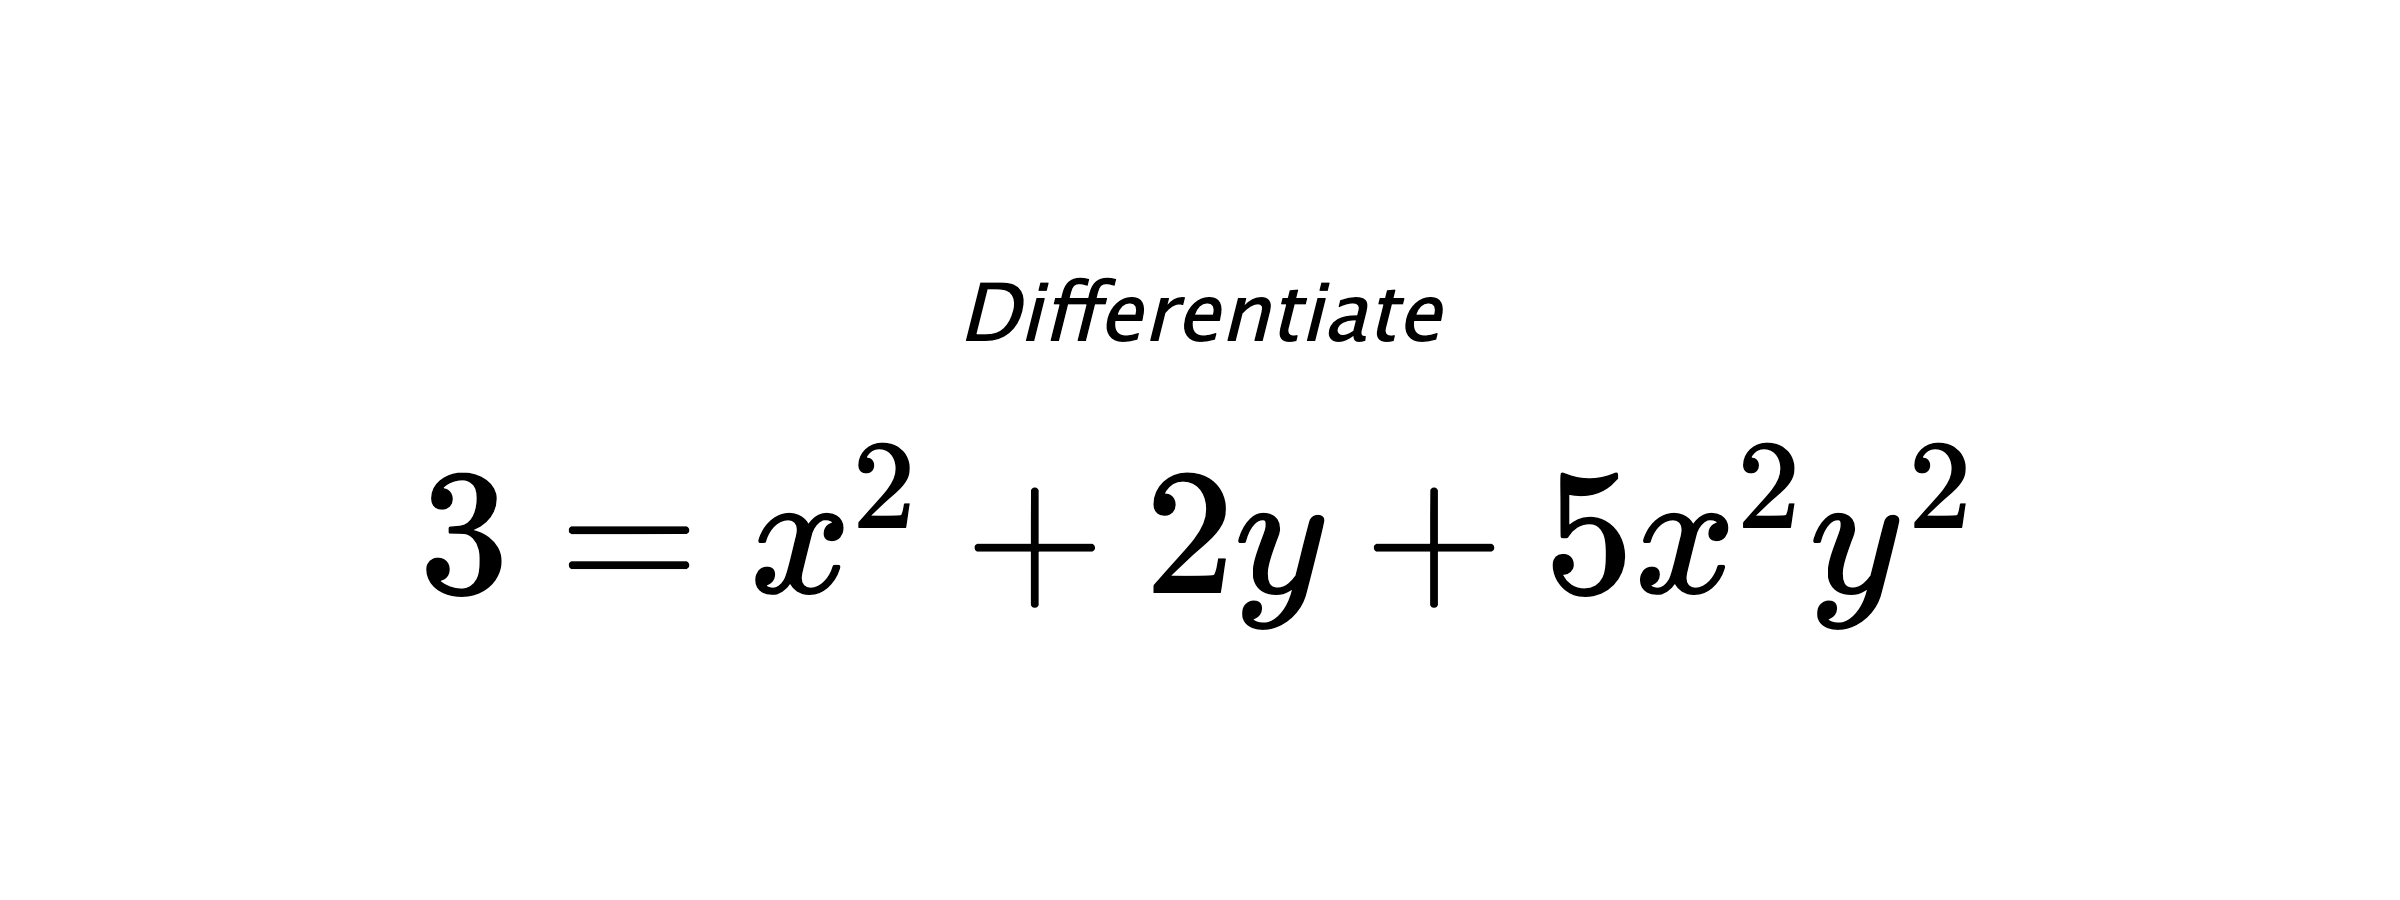 Differentiate $ 3 = x^2+2y+5x^2y^2 $